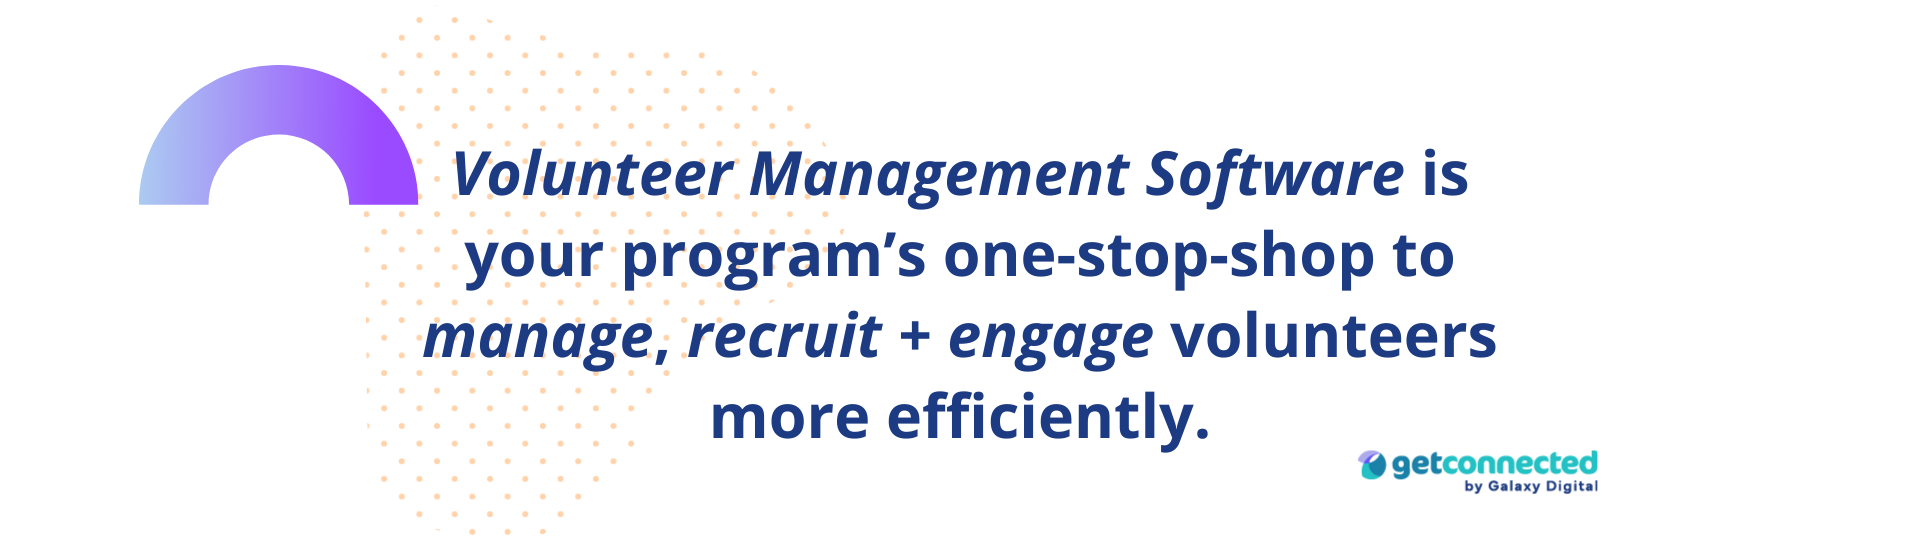 Volunteer management software solutions for volunteer programs